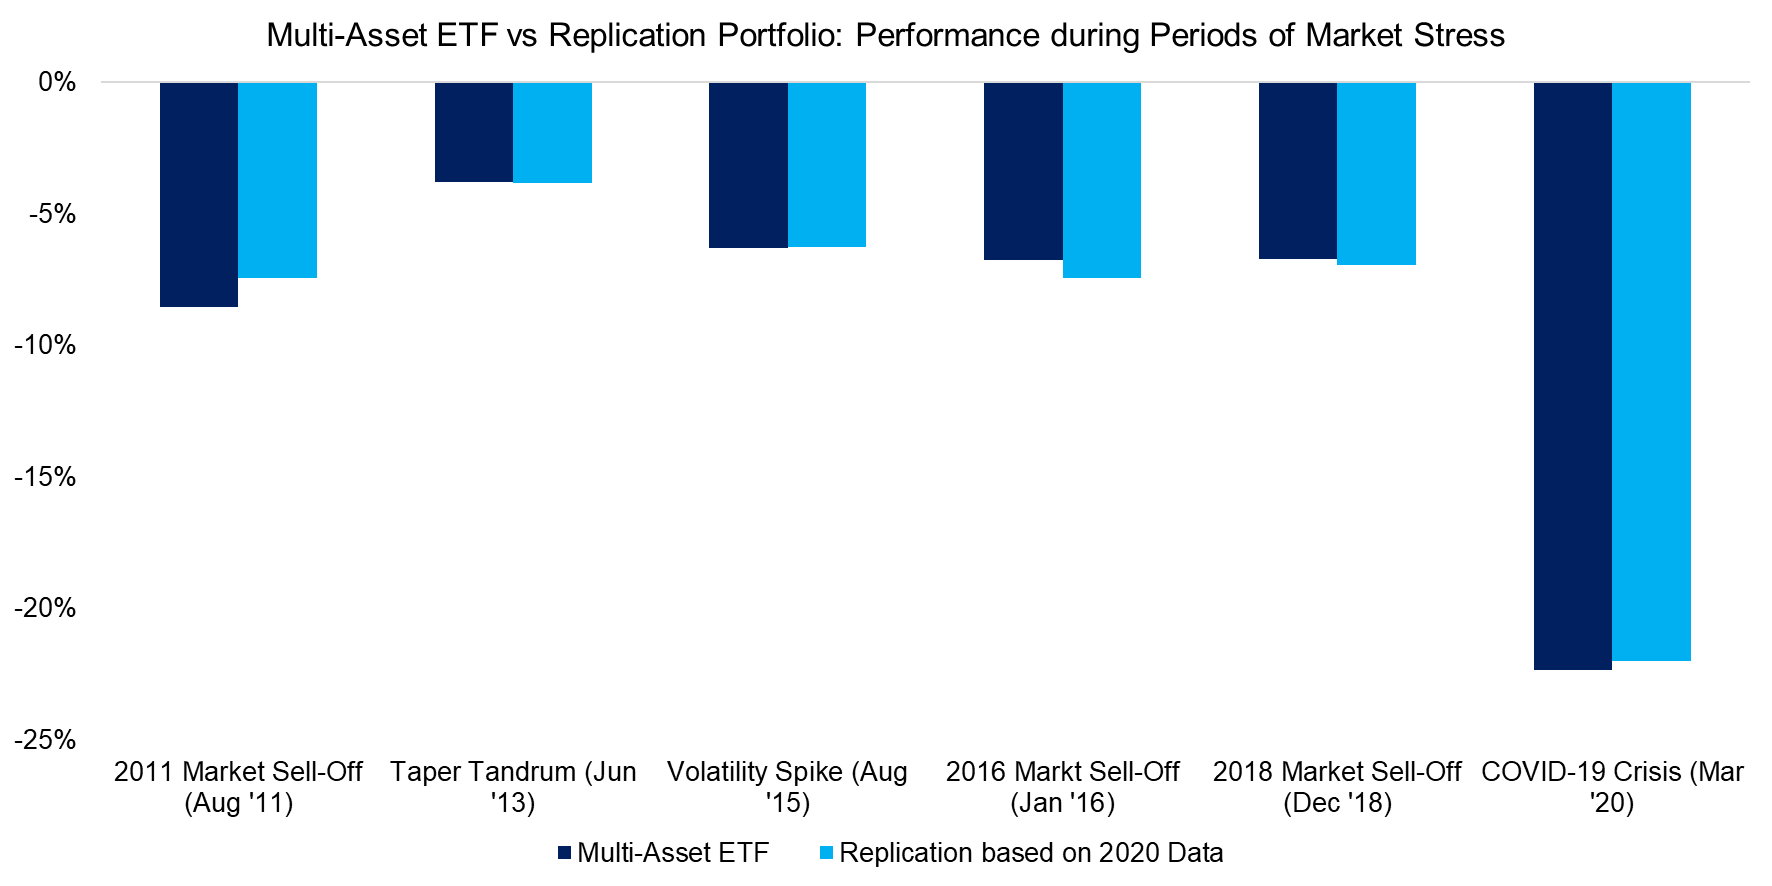 Multi-Asset ETF vs Replication Portfolio Performance during Periods of Market Stress